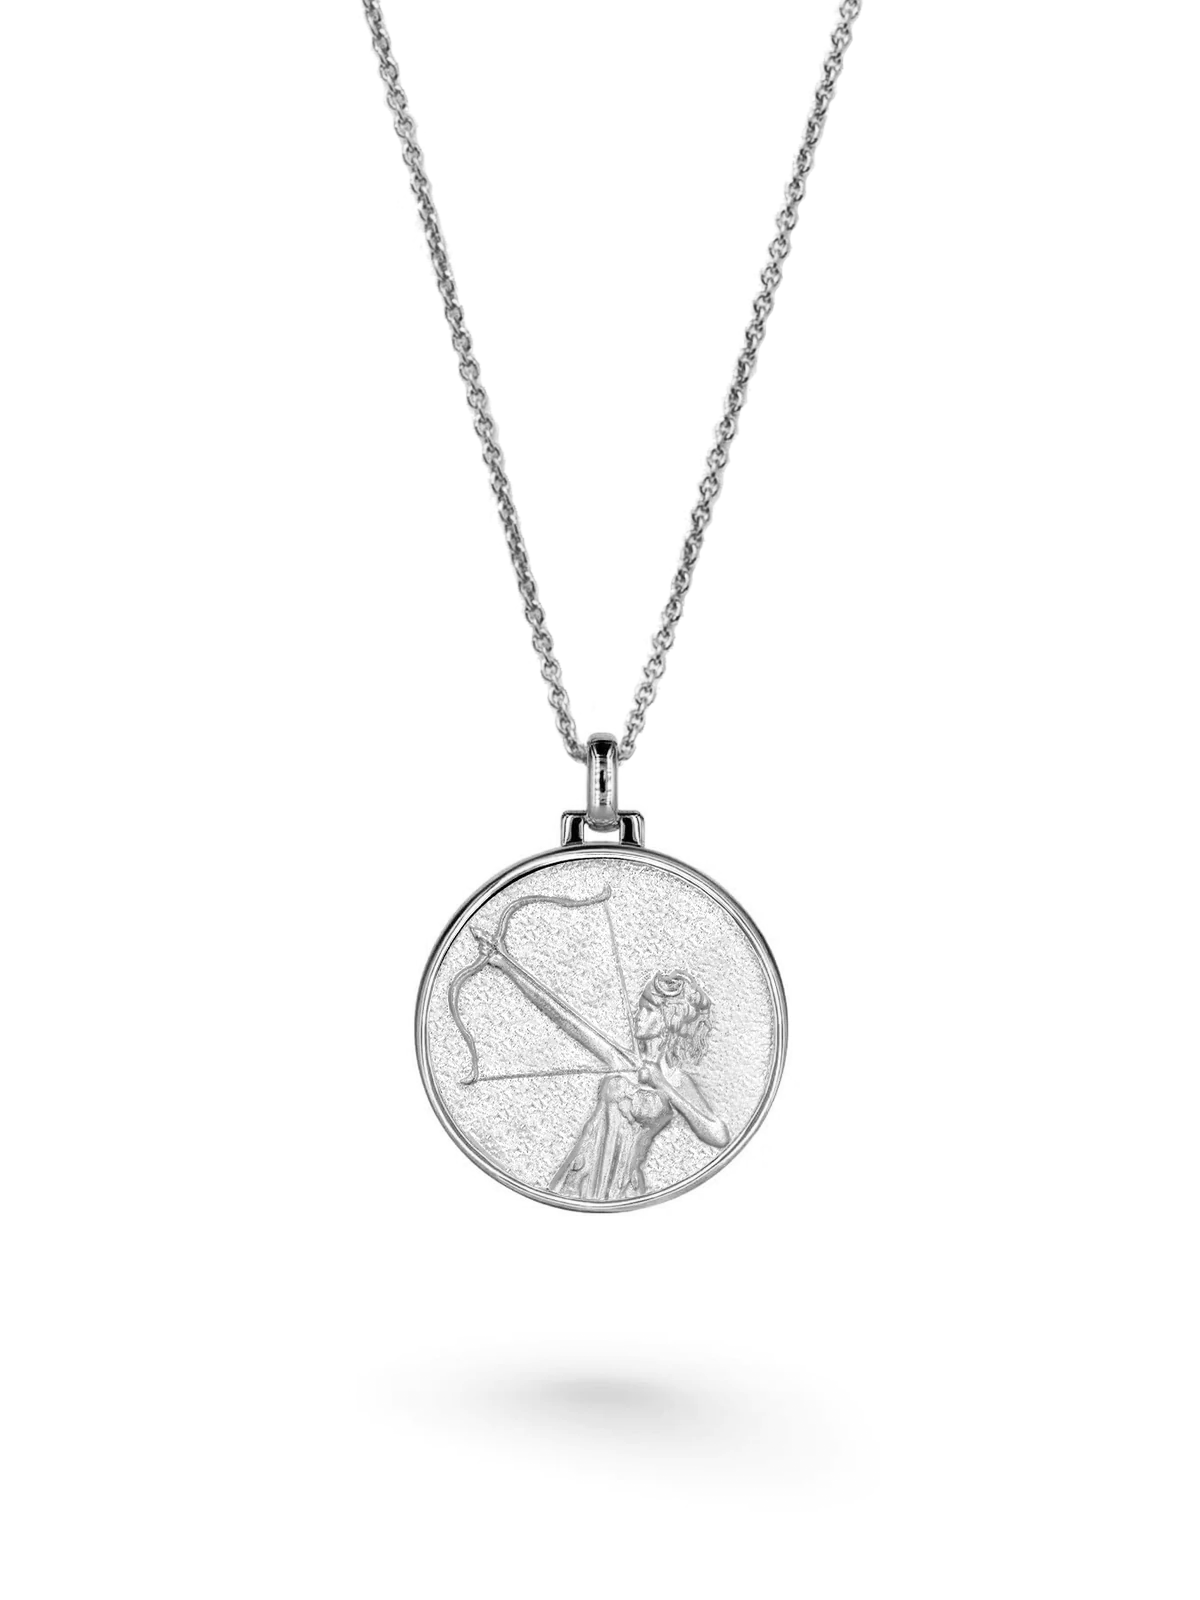 Artemis - Necklace - Silver